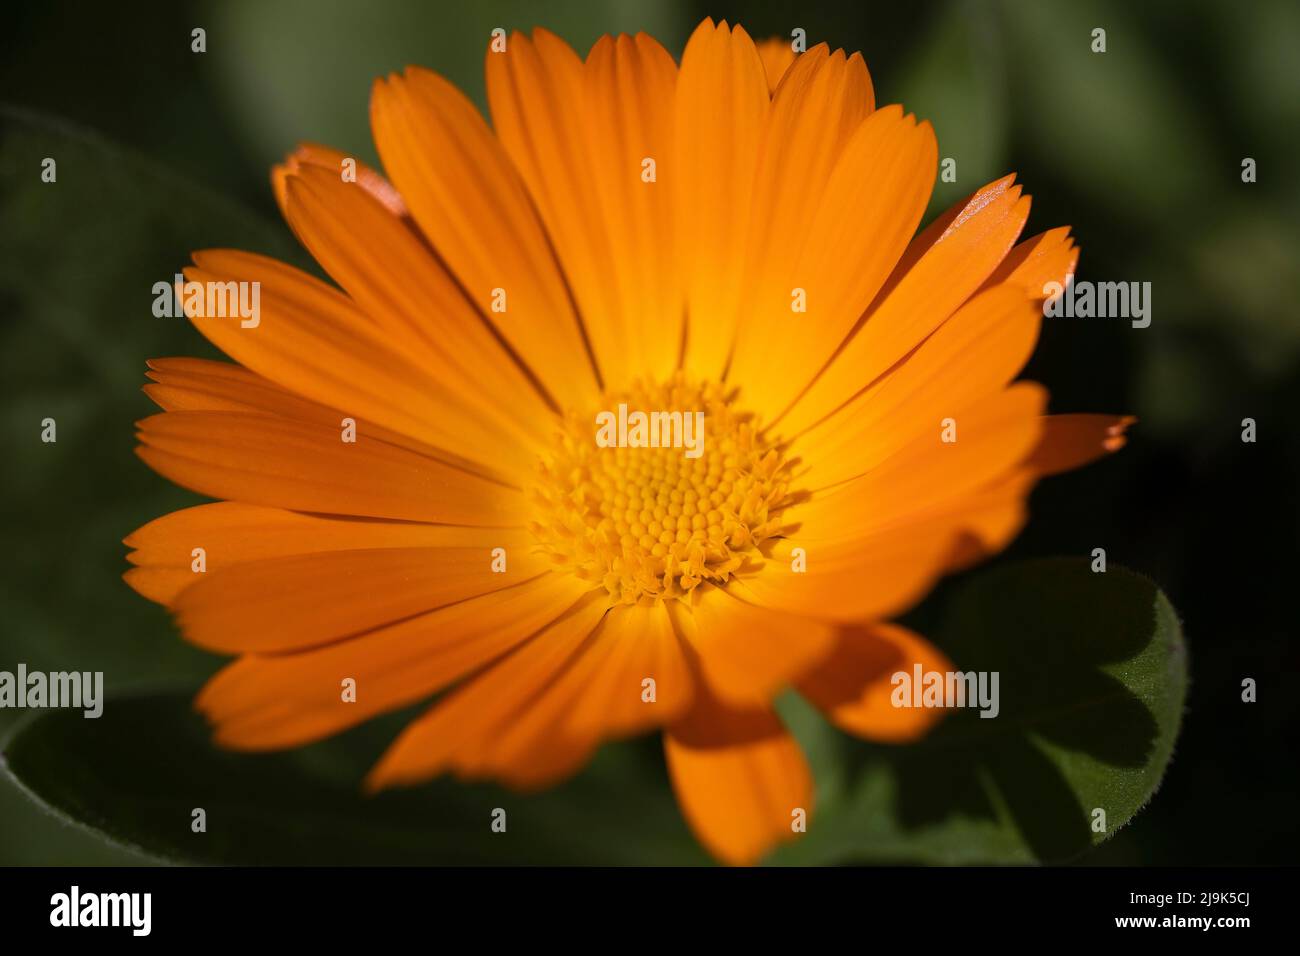 Close up vibrant orange daisy blooming Stock Photo